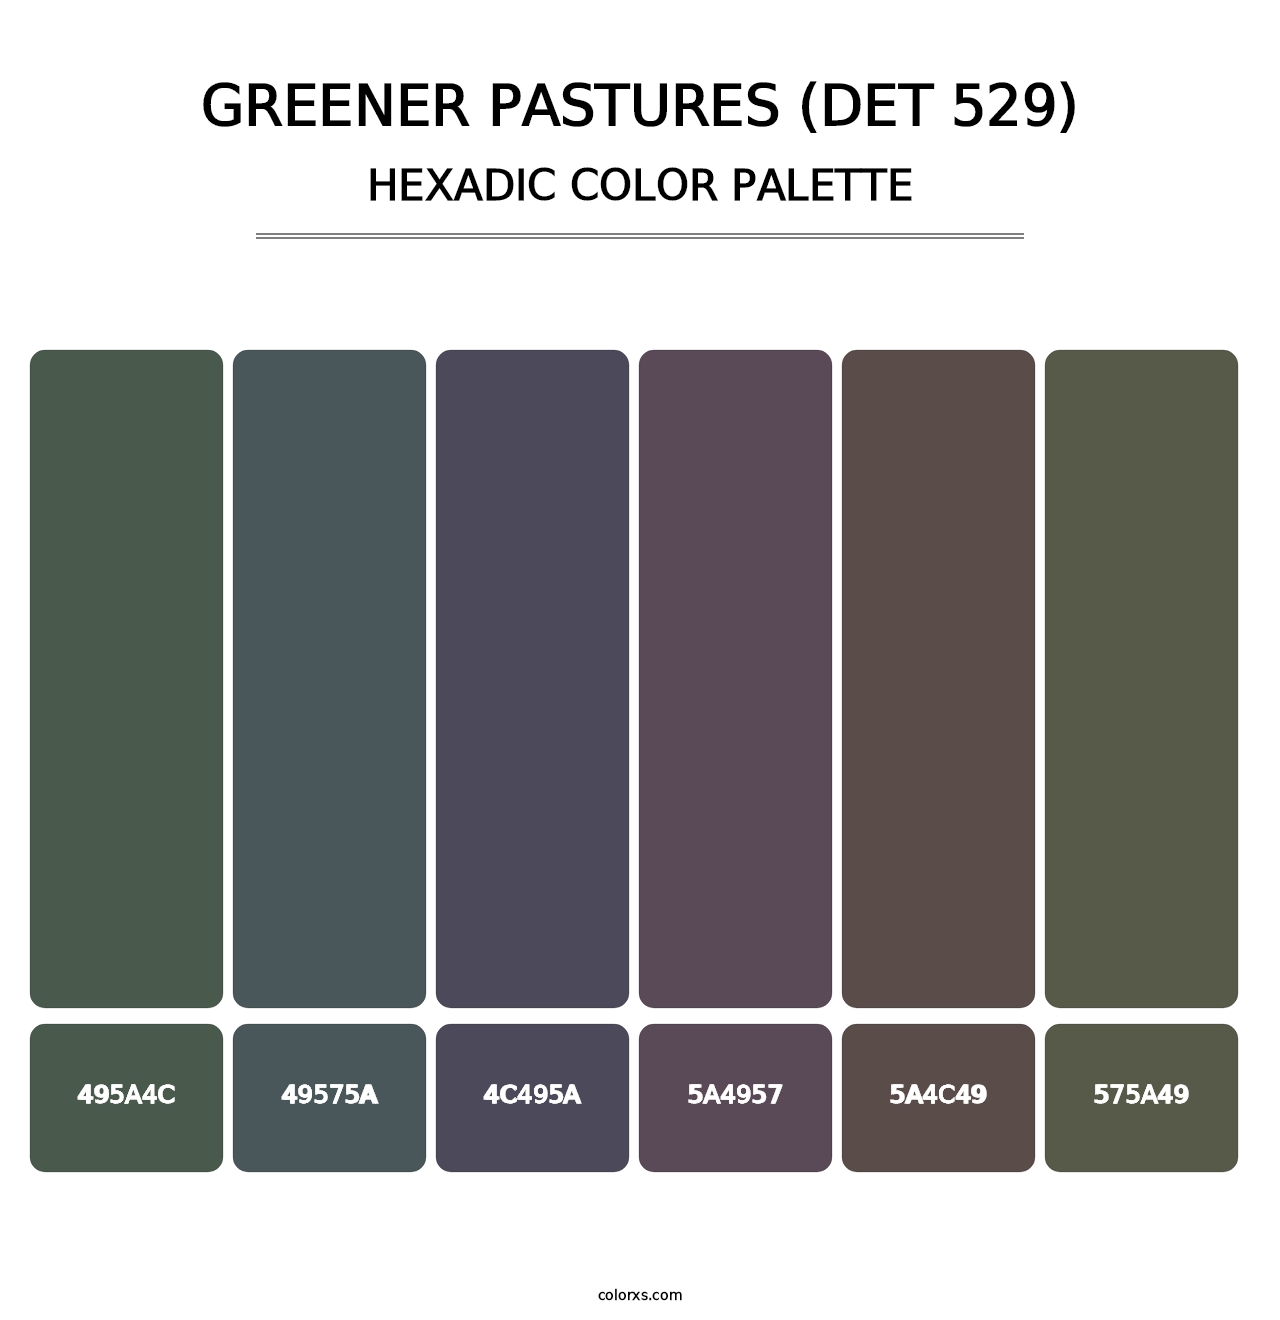 Greener Pastures (DET 529) - Hexadic Color Palette